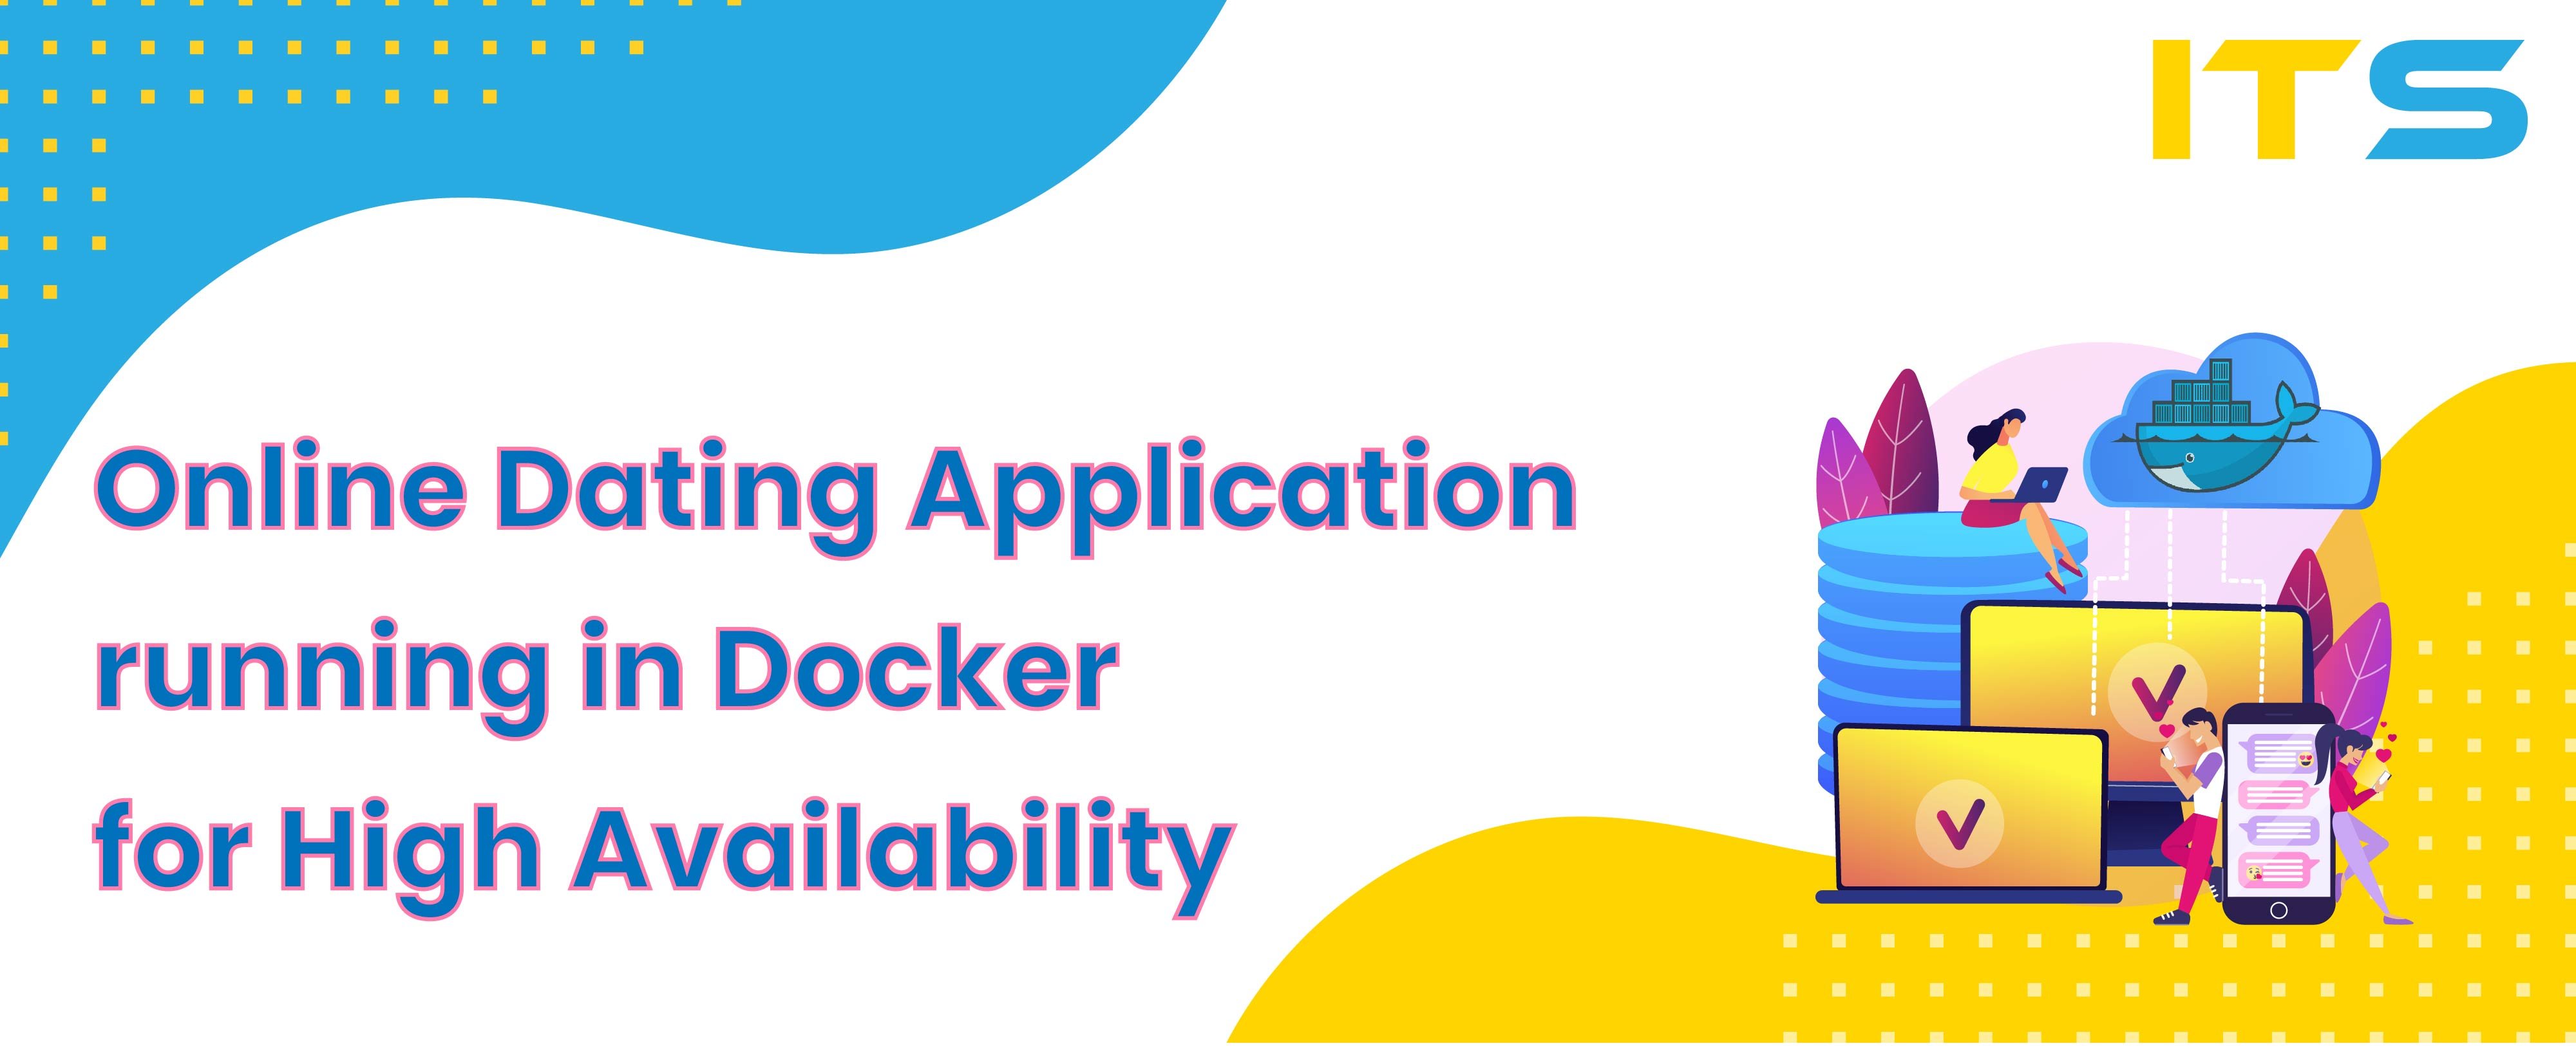 Online Dating Application running in Docker for High Availability